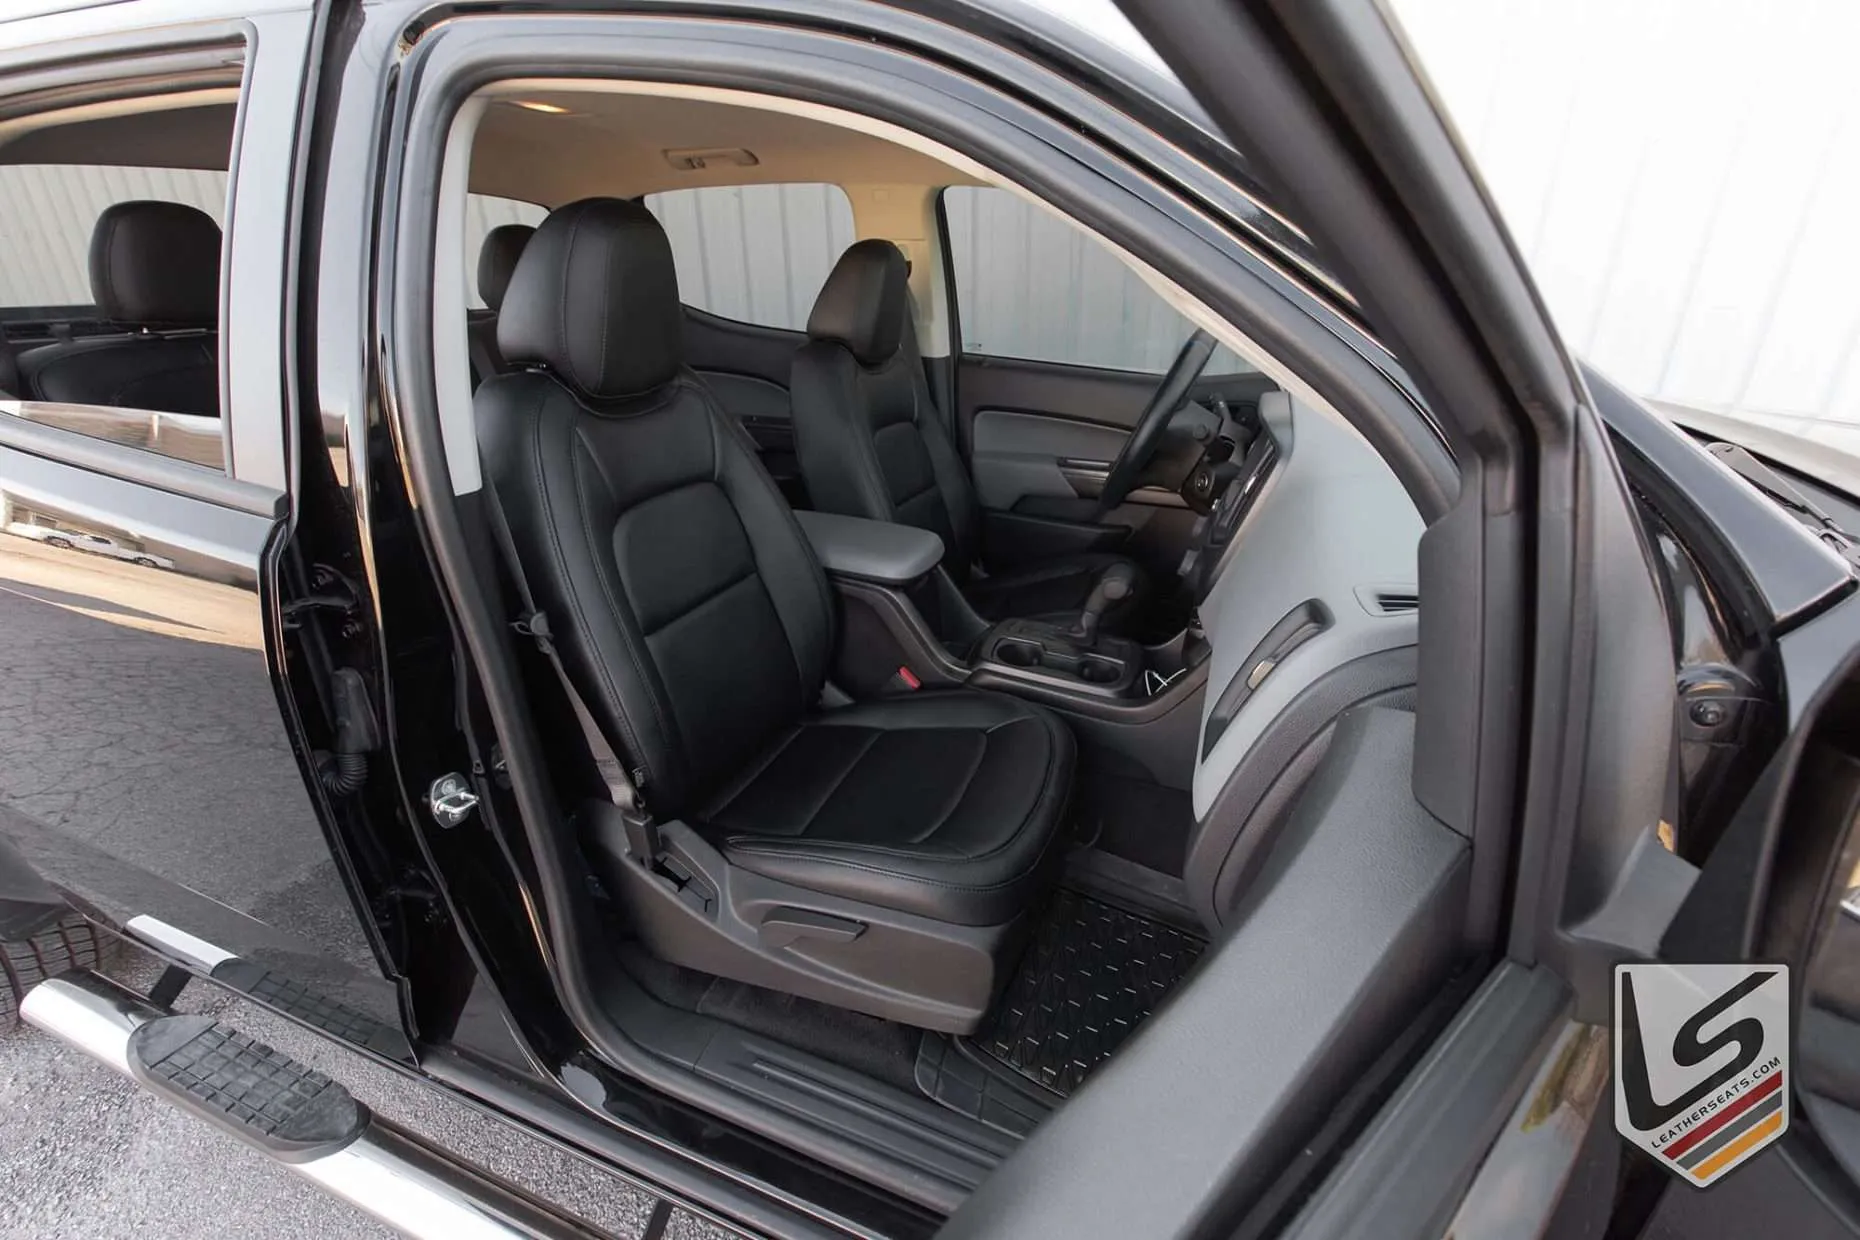 Leatherseats.com custom Chevy Colorado leather interior - passenger side